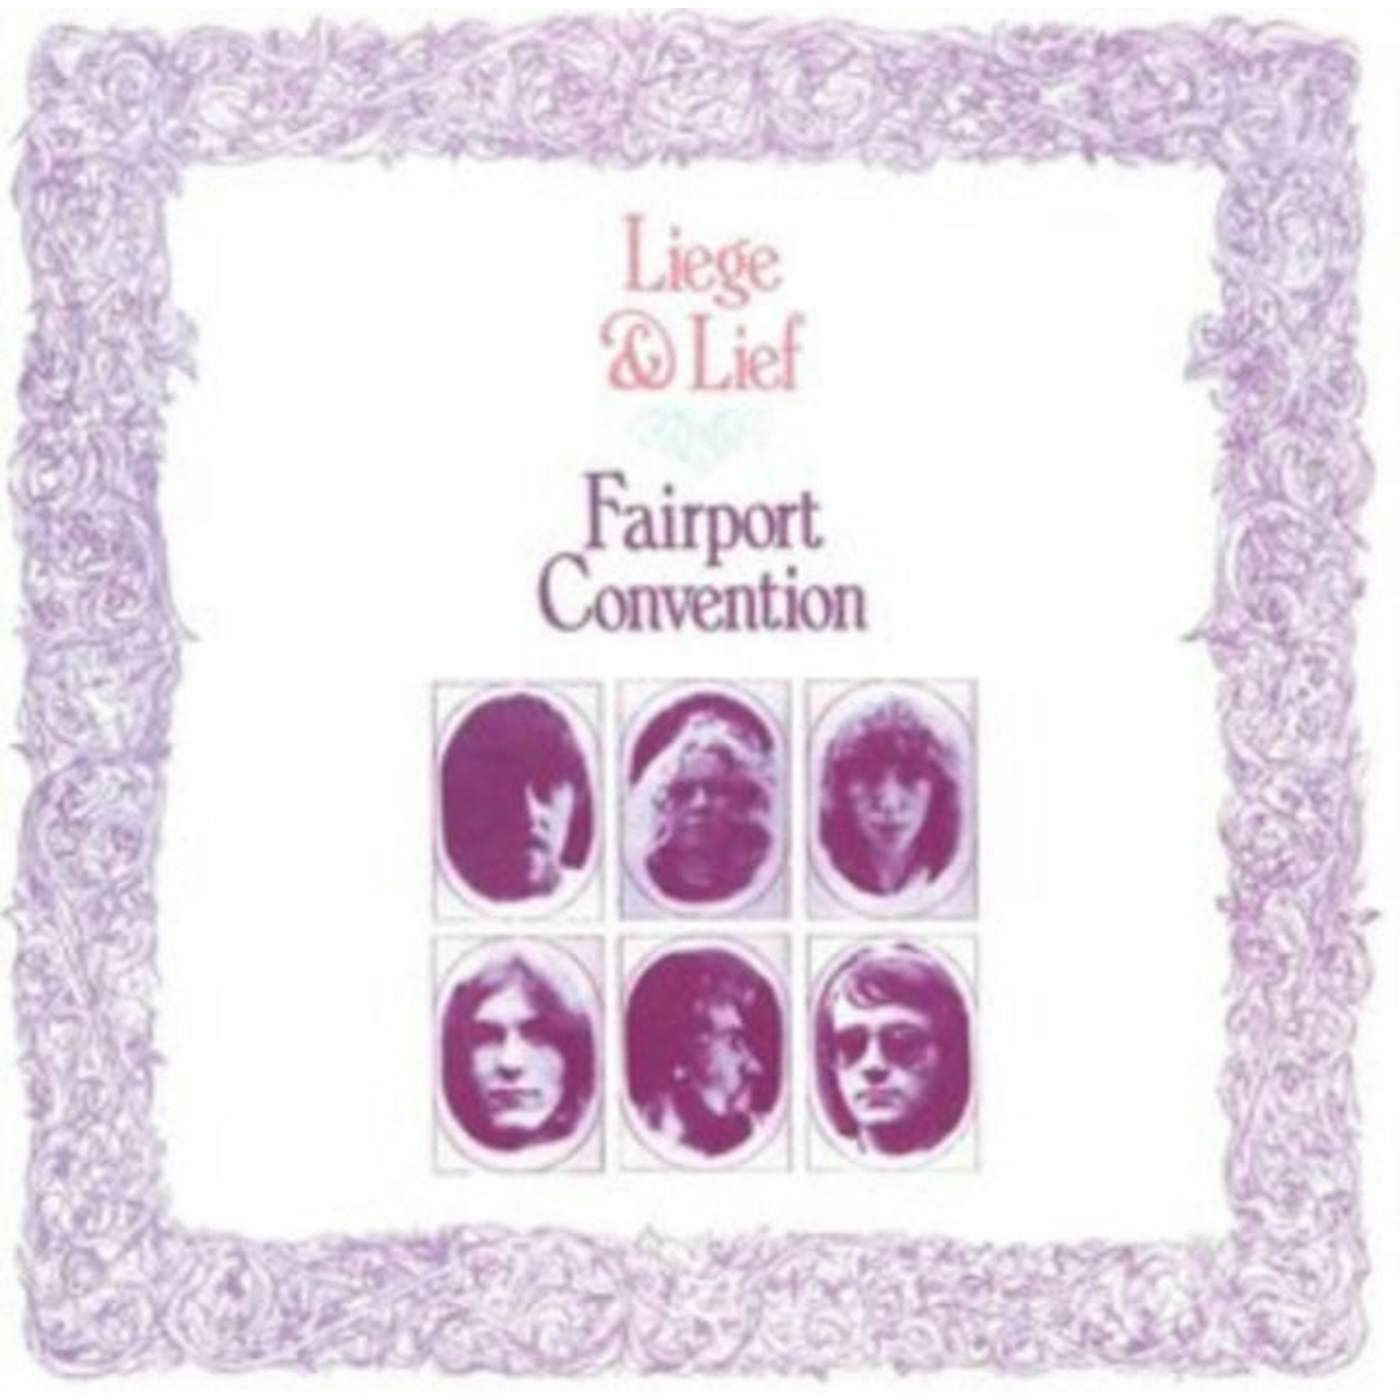 Fairport Convention CD - Liege & Lief